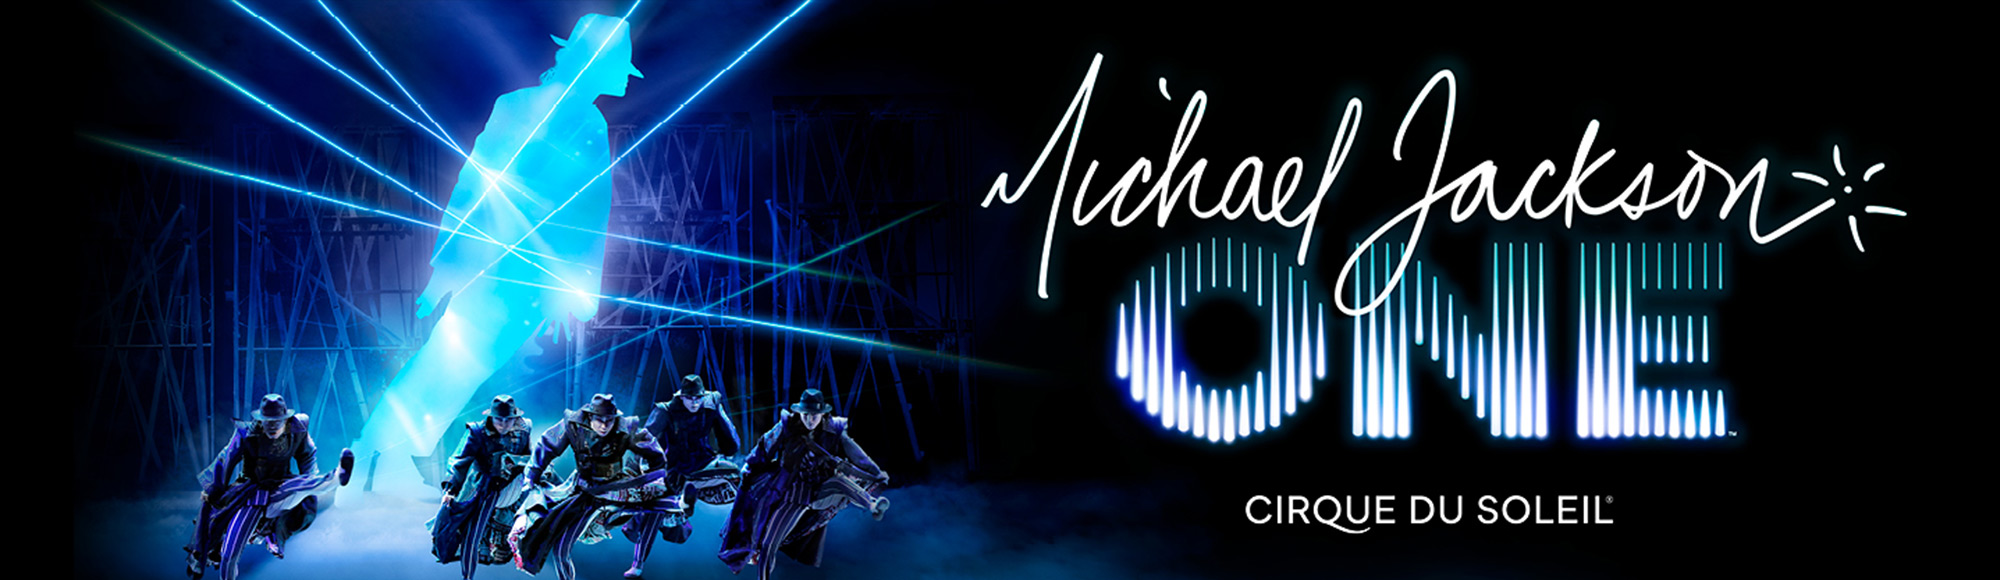 Michael Jackson ONE by Cirque du Soleil show